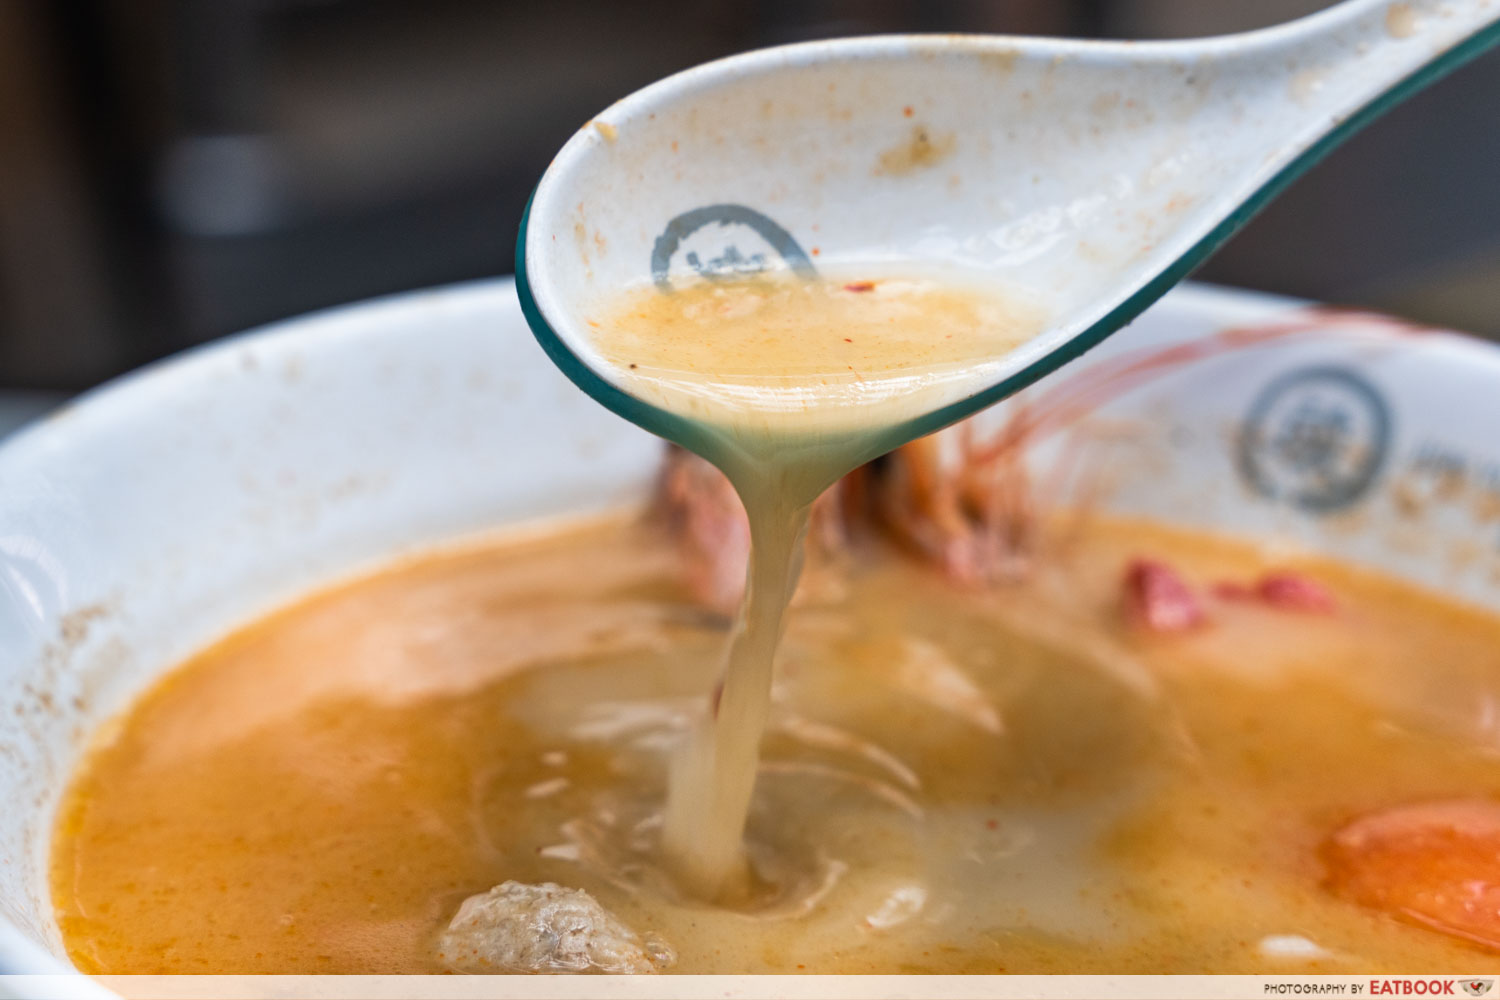 jun-yuan-house-of-fish-herbal-soup-pour